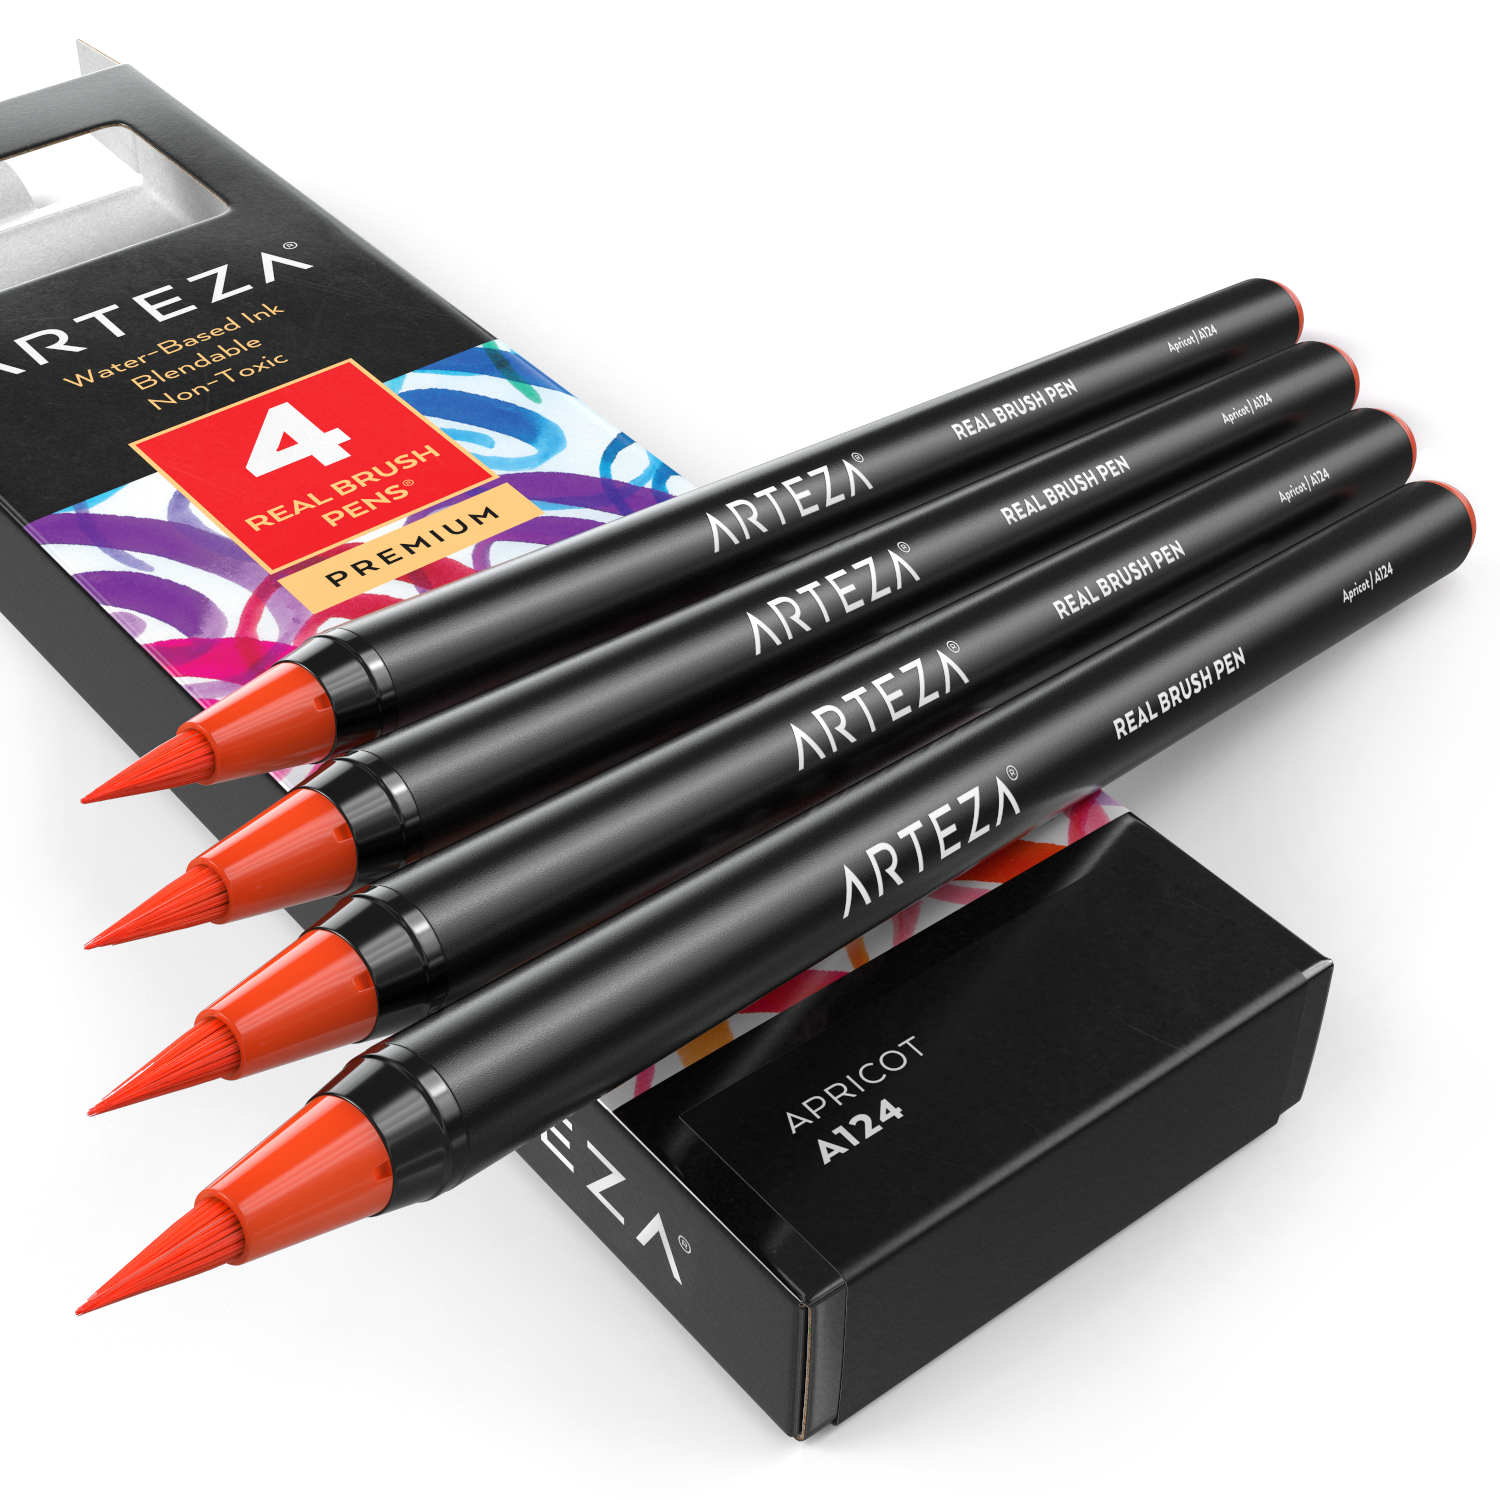 ARTEZA Watercolor Brush Pens 96 Colors Art Painting Marker Set with Travel  Case